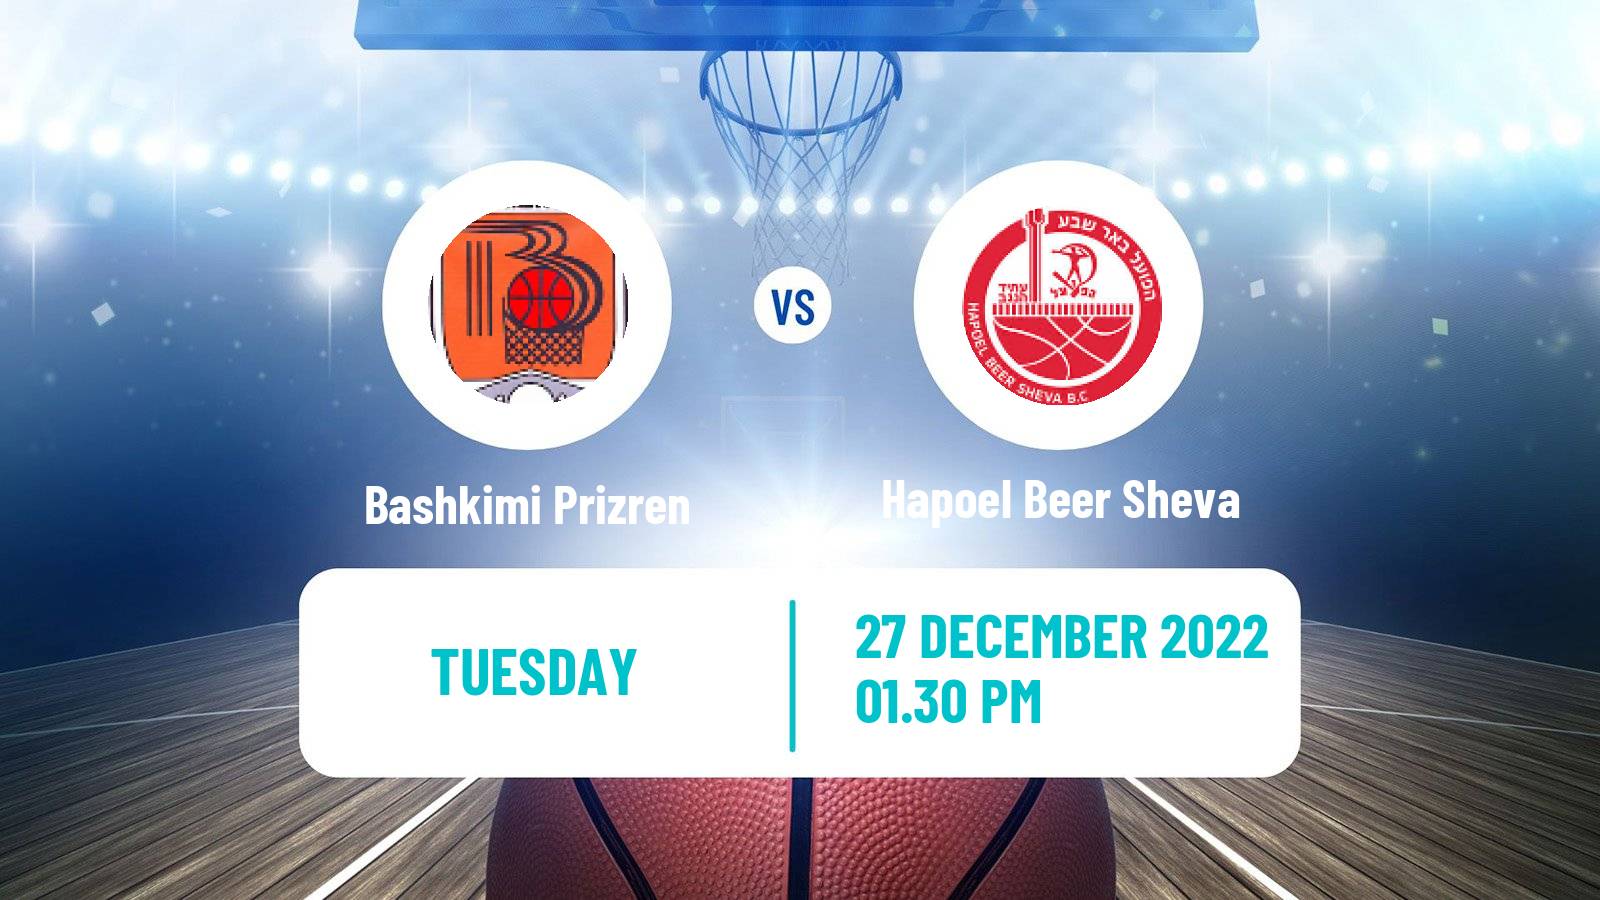 Basketball Balkan International Basketball League Bashkimi Prizren - Hapoel Beer Sheva